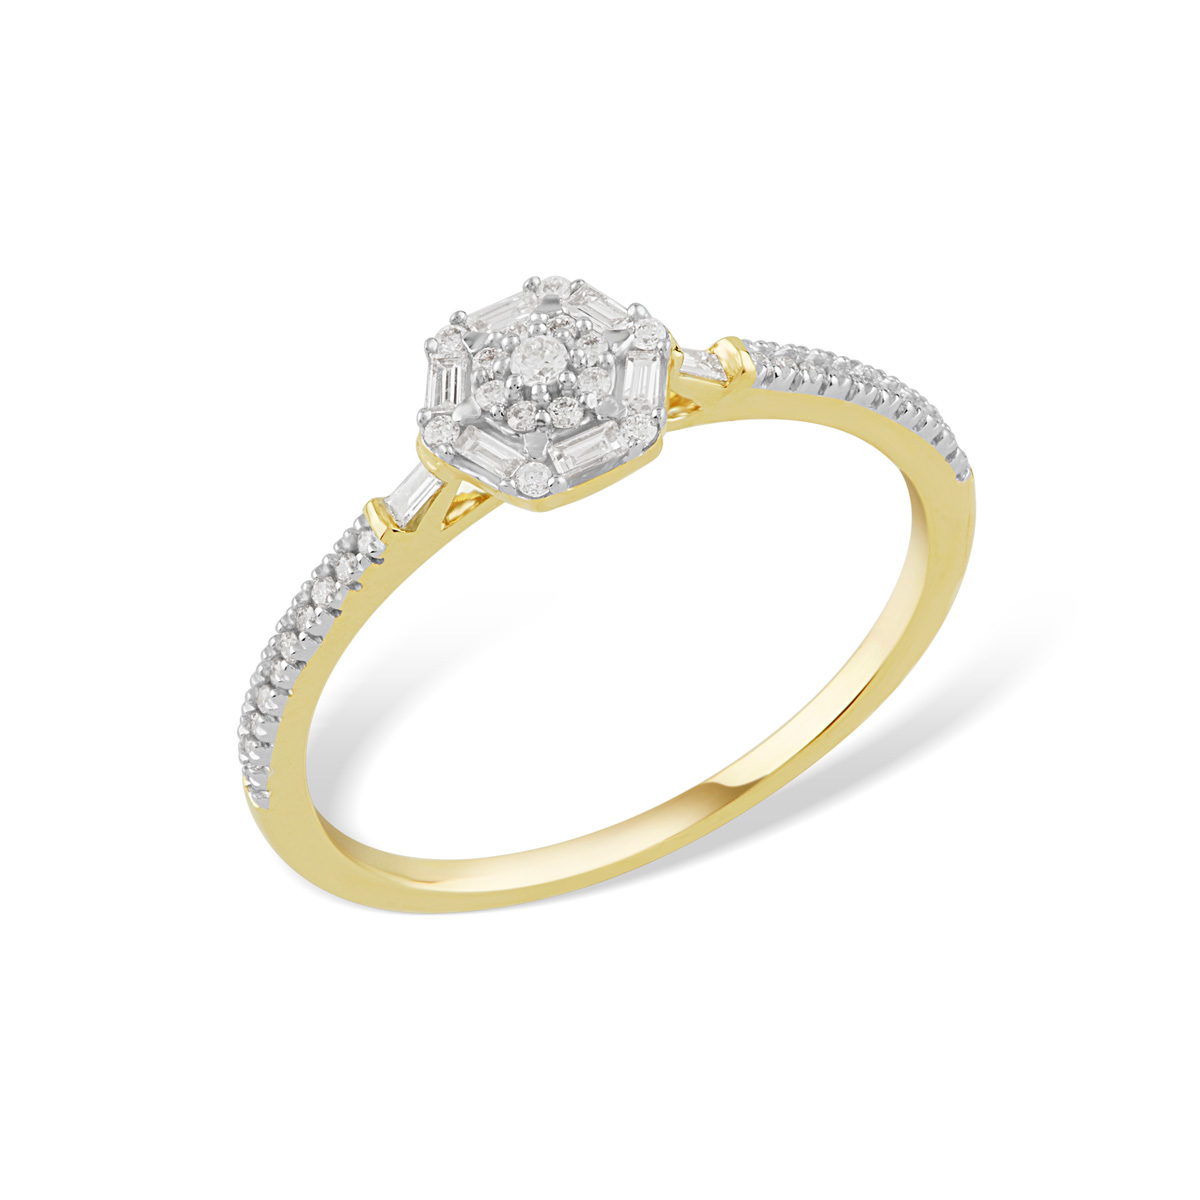 FI52576QWD4YP
14k yellow gold diamond ring